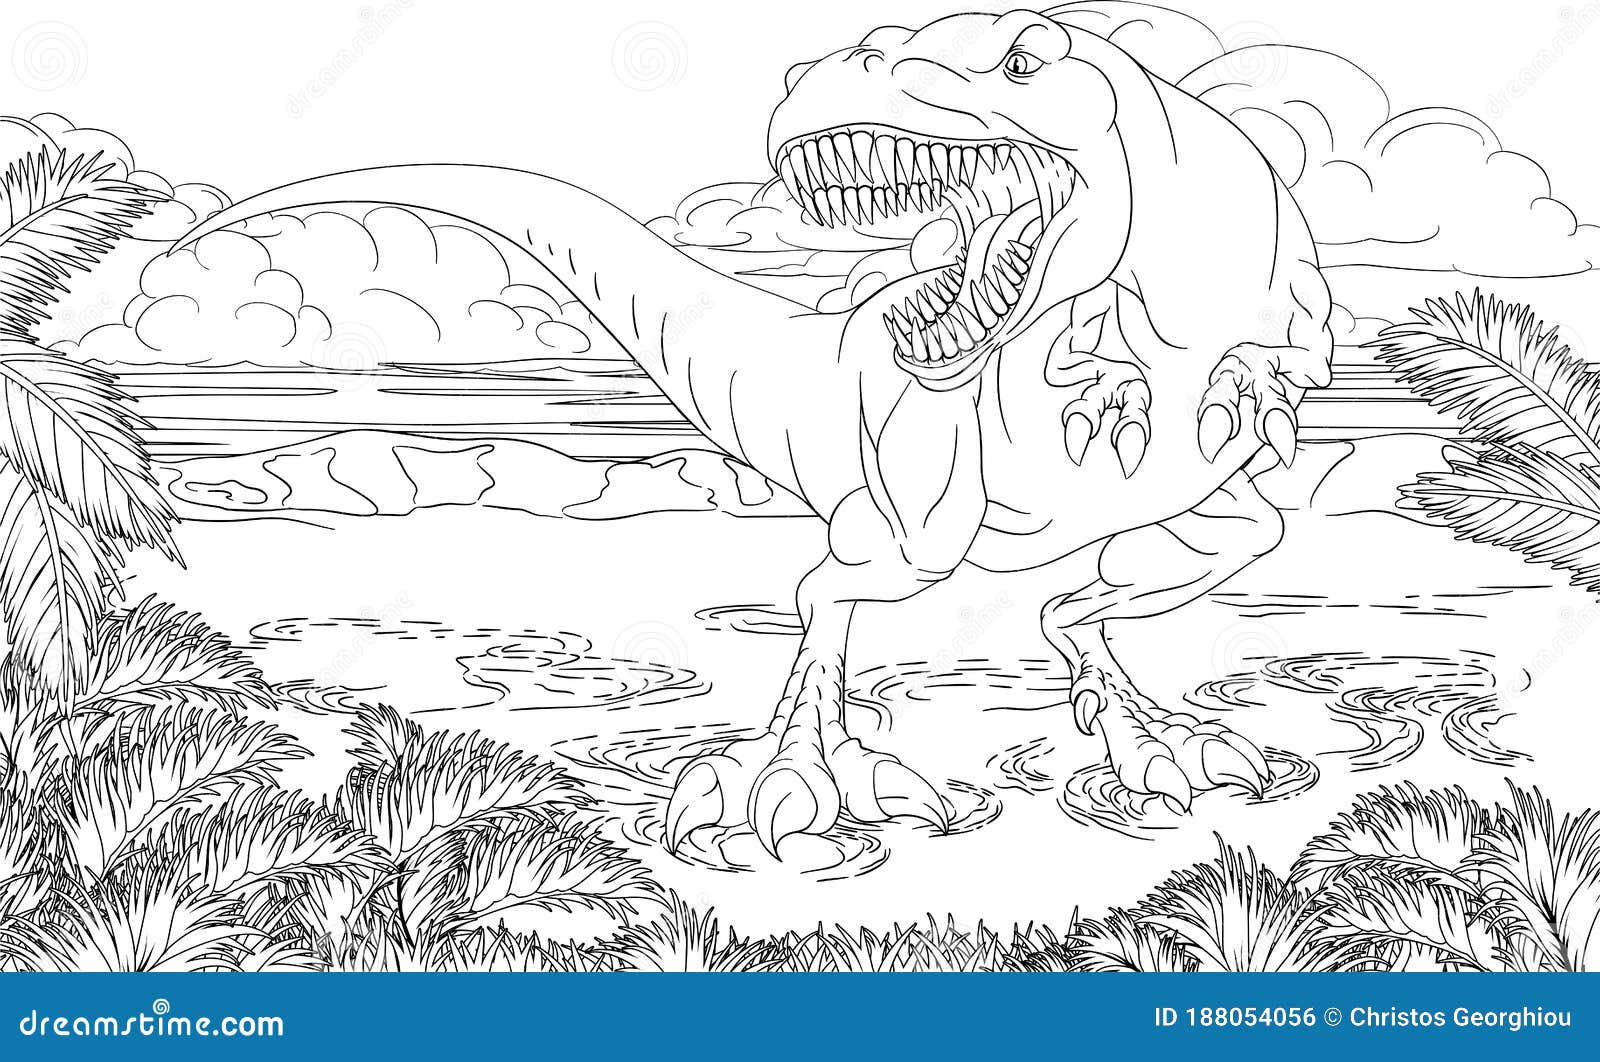 Fierce T-rex grátis para imprimir e colorir imagem